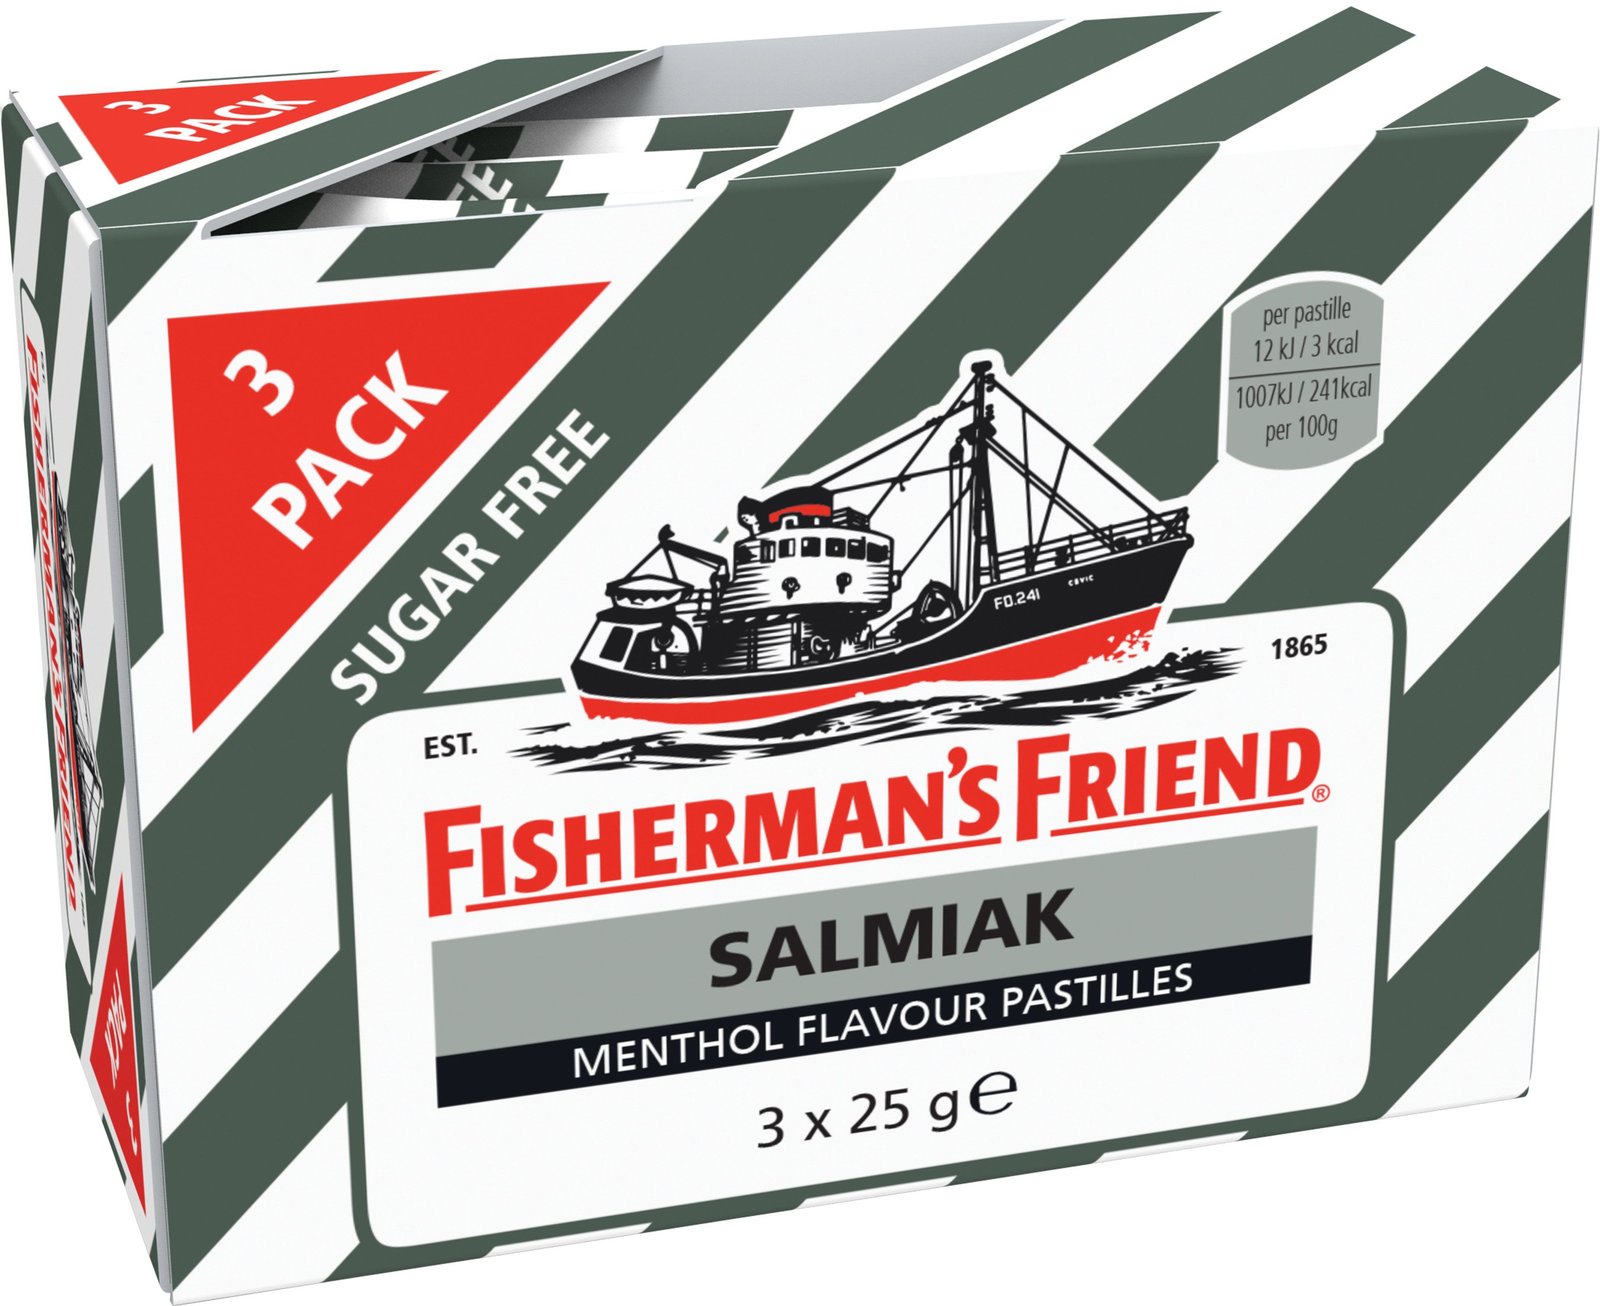 Fisherman's Friend Salmiak 3 x 25 g